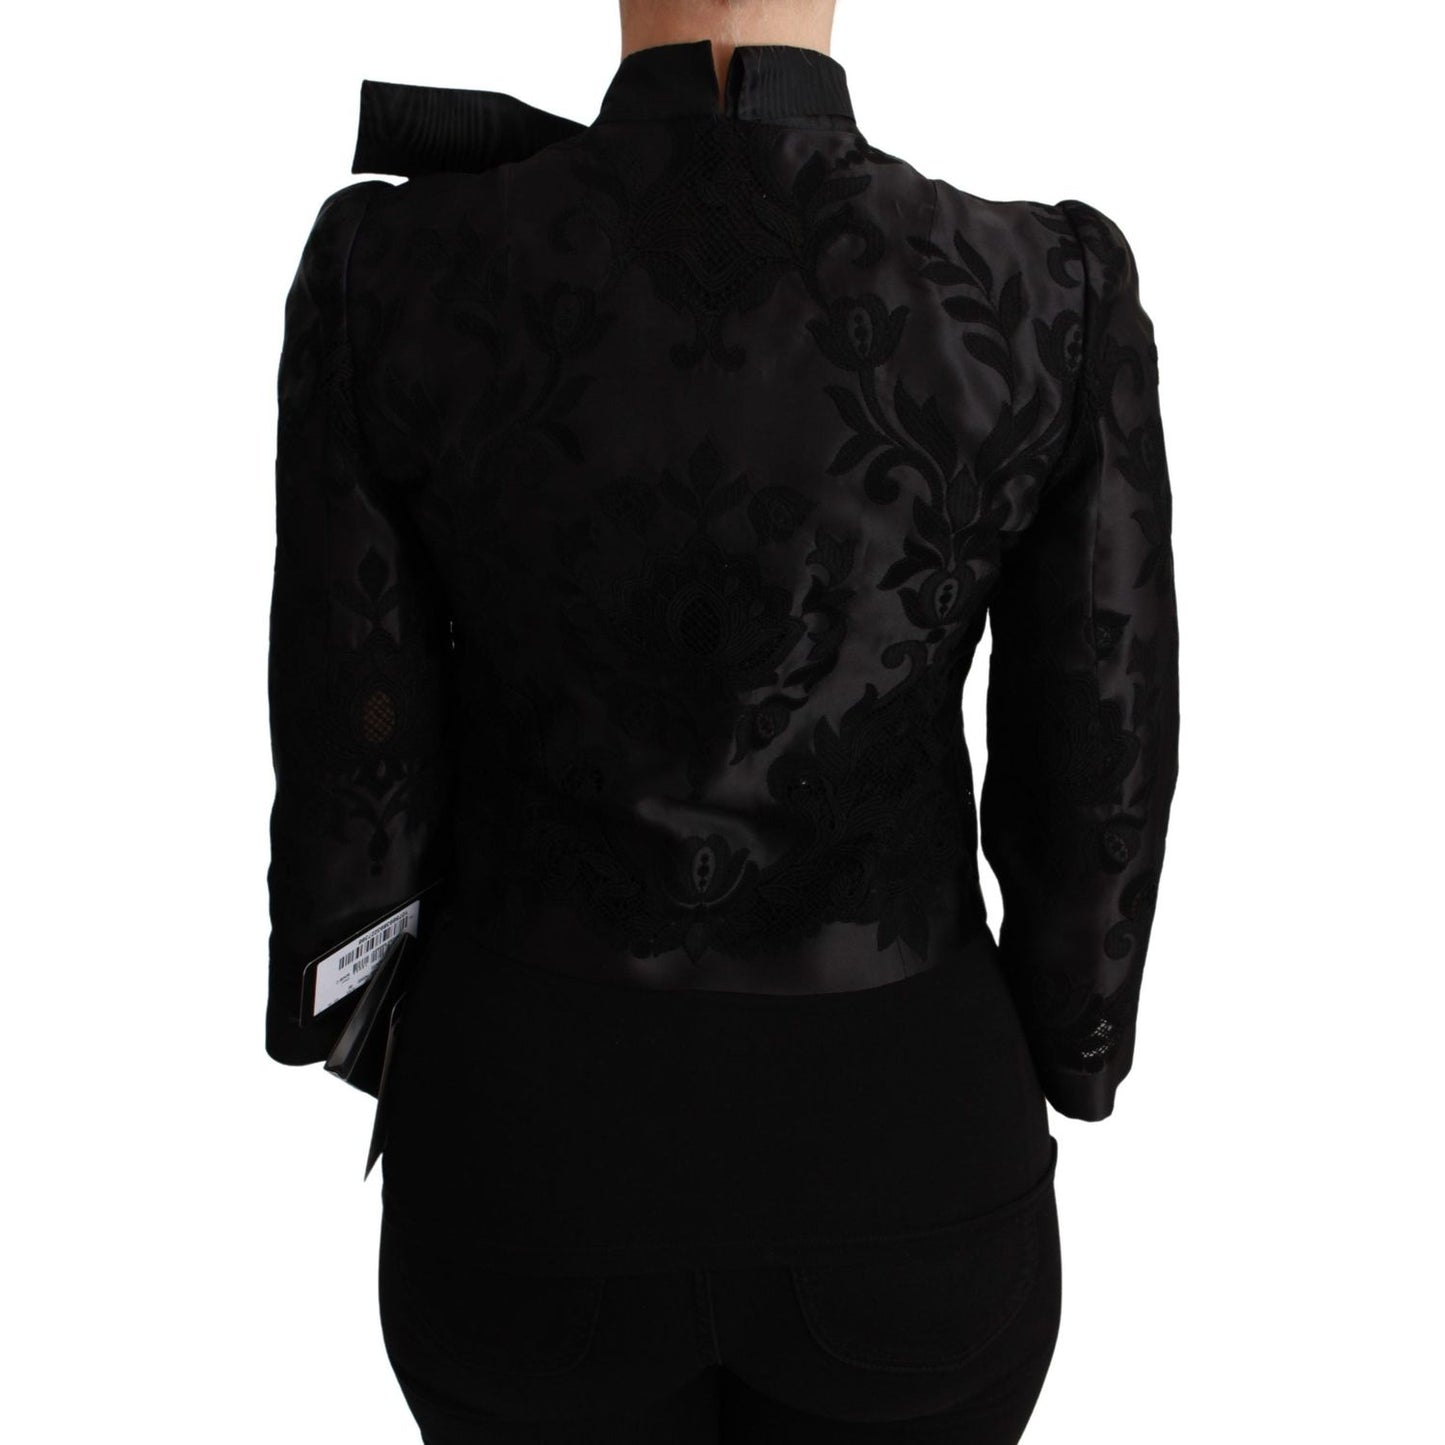 Dolce & Gabbana Exquisite Floral Jacquard Corset Blazer Coats & Jackets black-floral-jacquard-blazer-silk-jacket